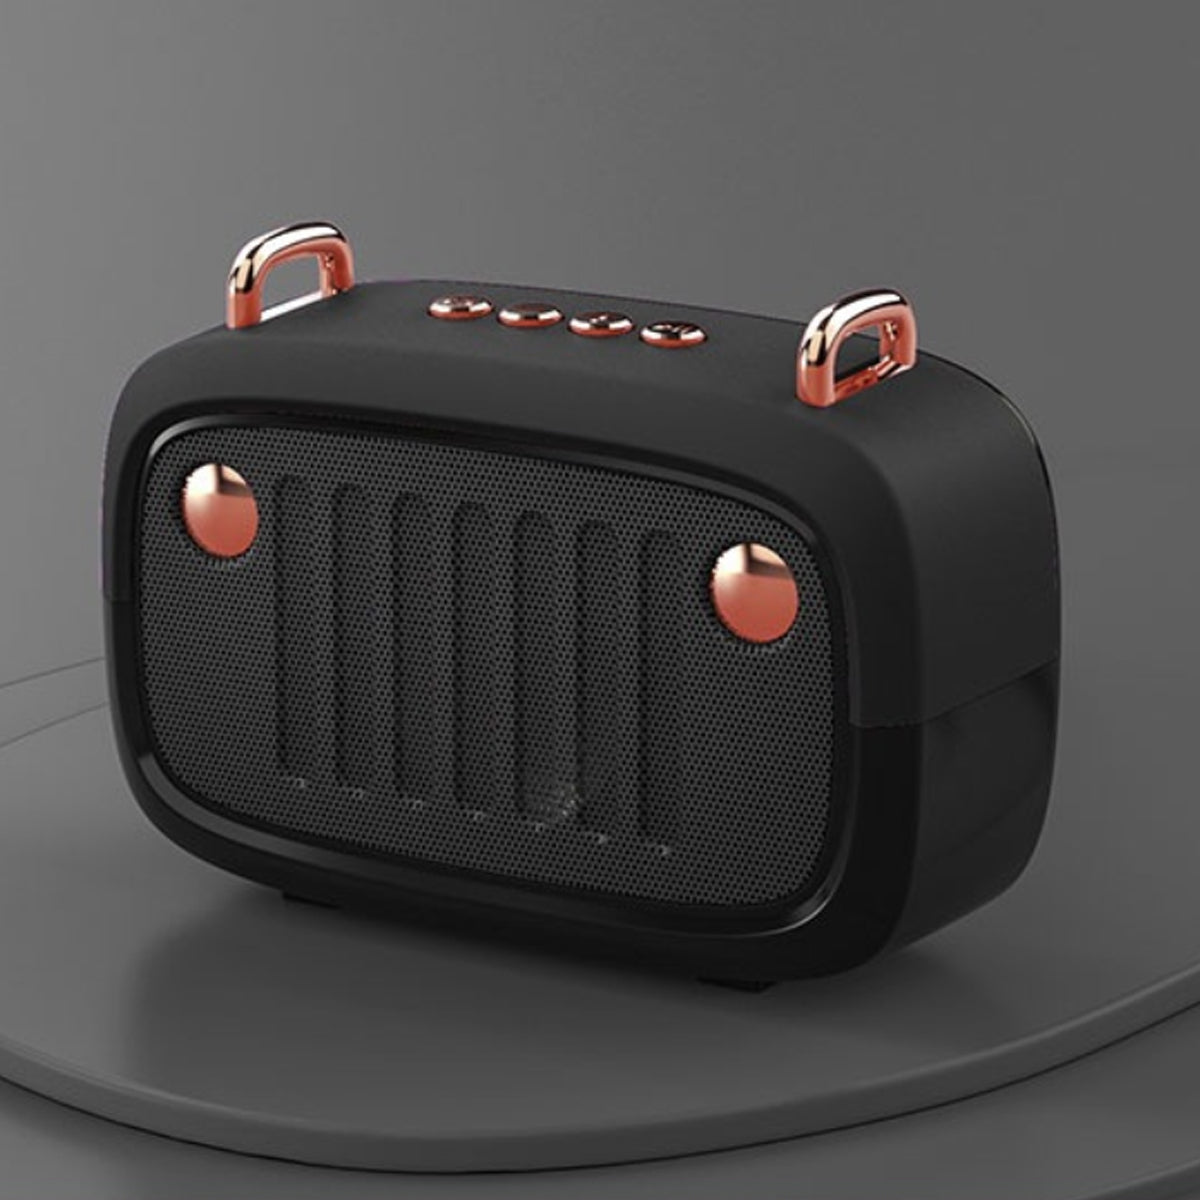 Retro Look FM Radio And Bluetooth Speaker by VistaShops